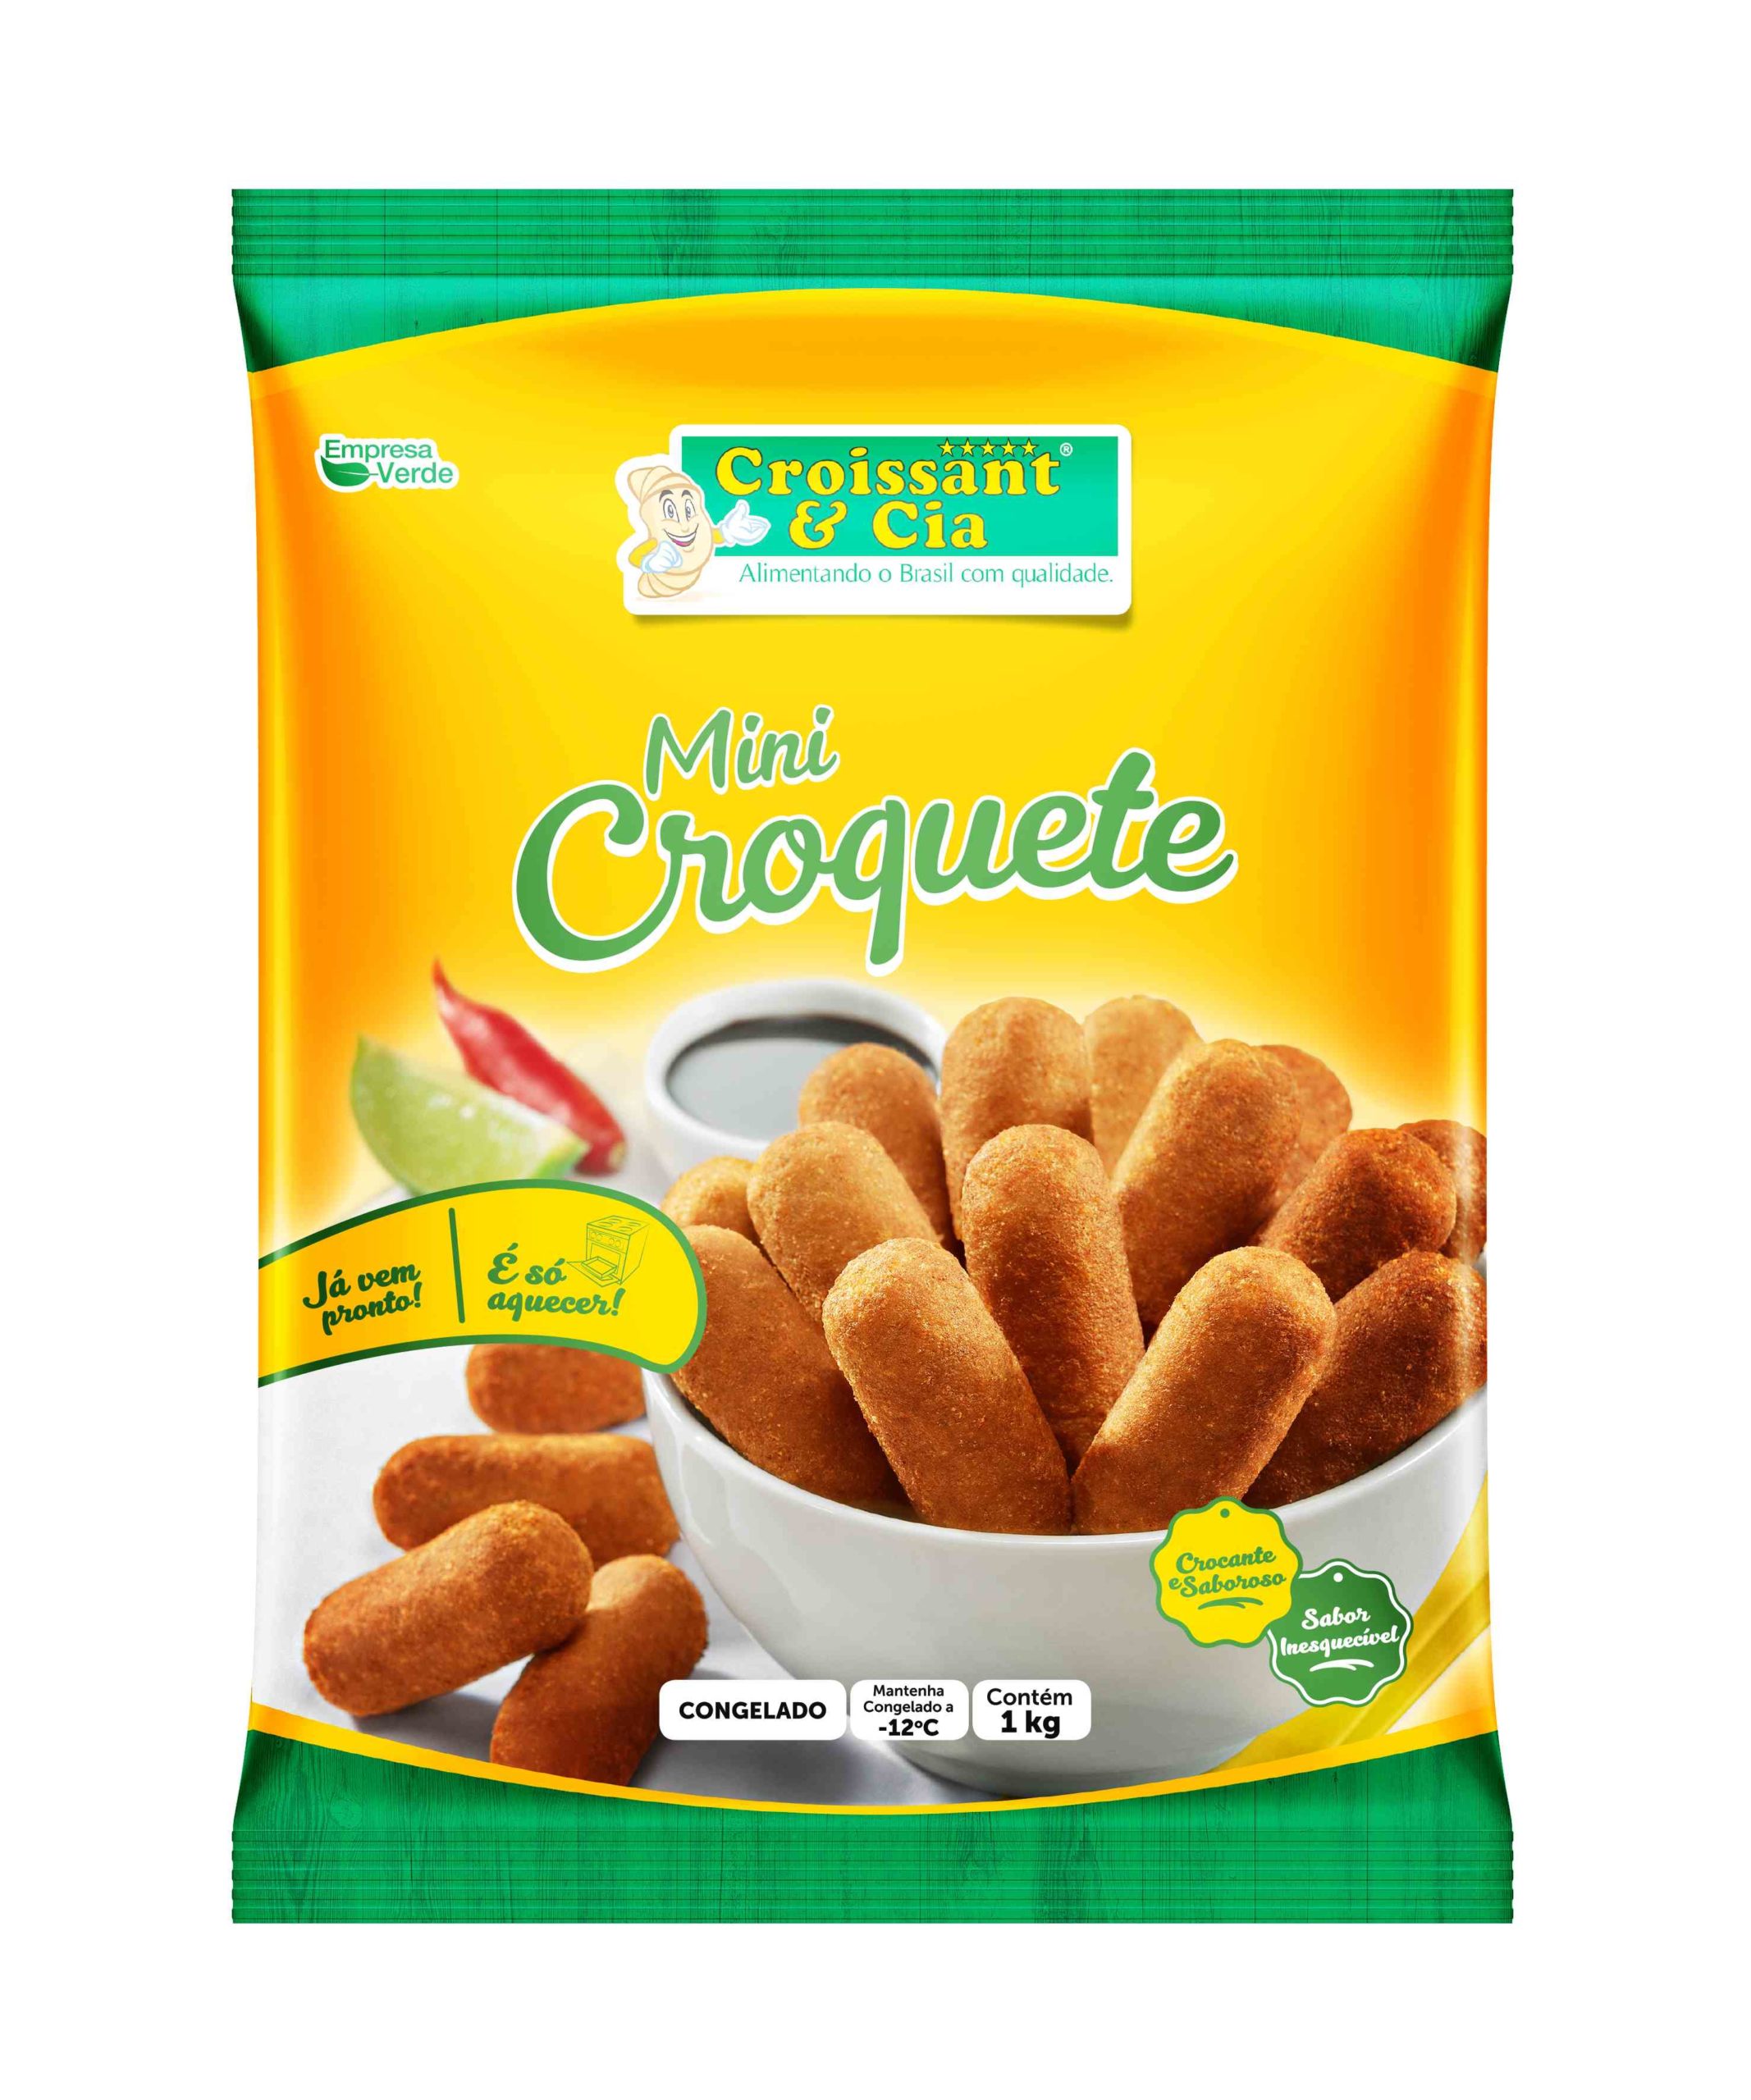 Croquete Croissant & Cia Magisfood